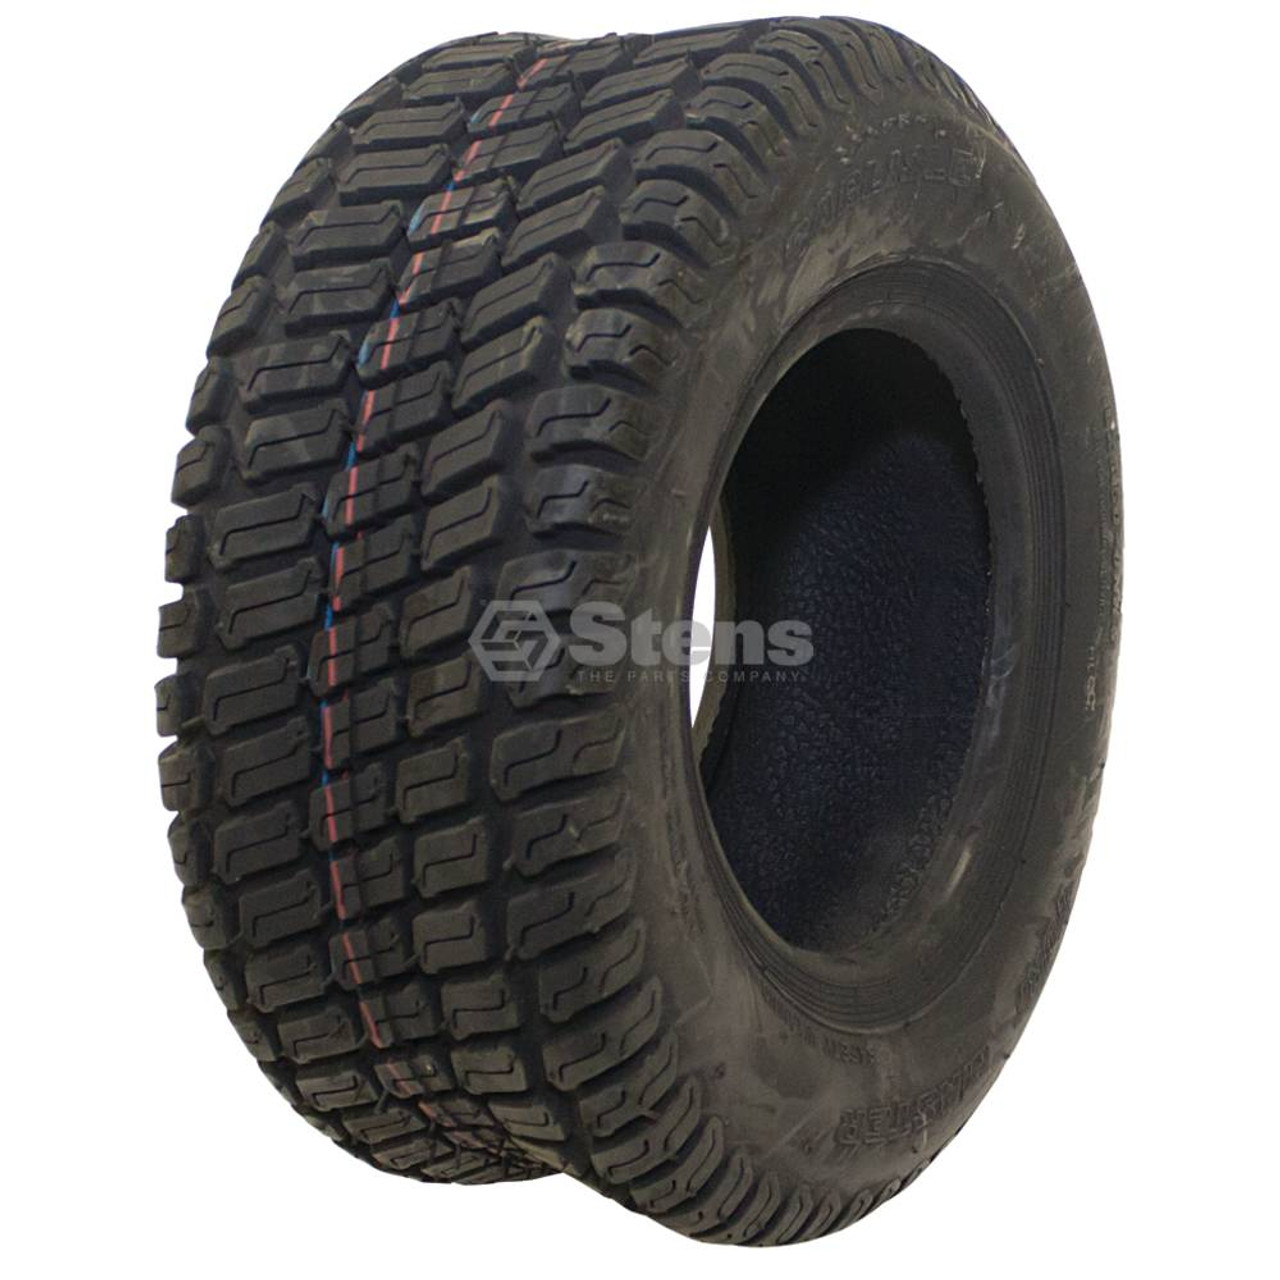 Tire / 16x6.50-8 Turf Master 4 Ply